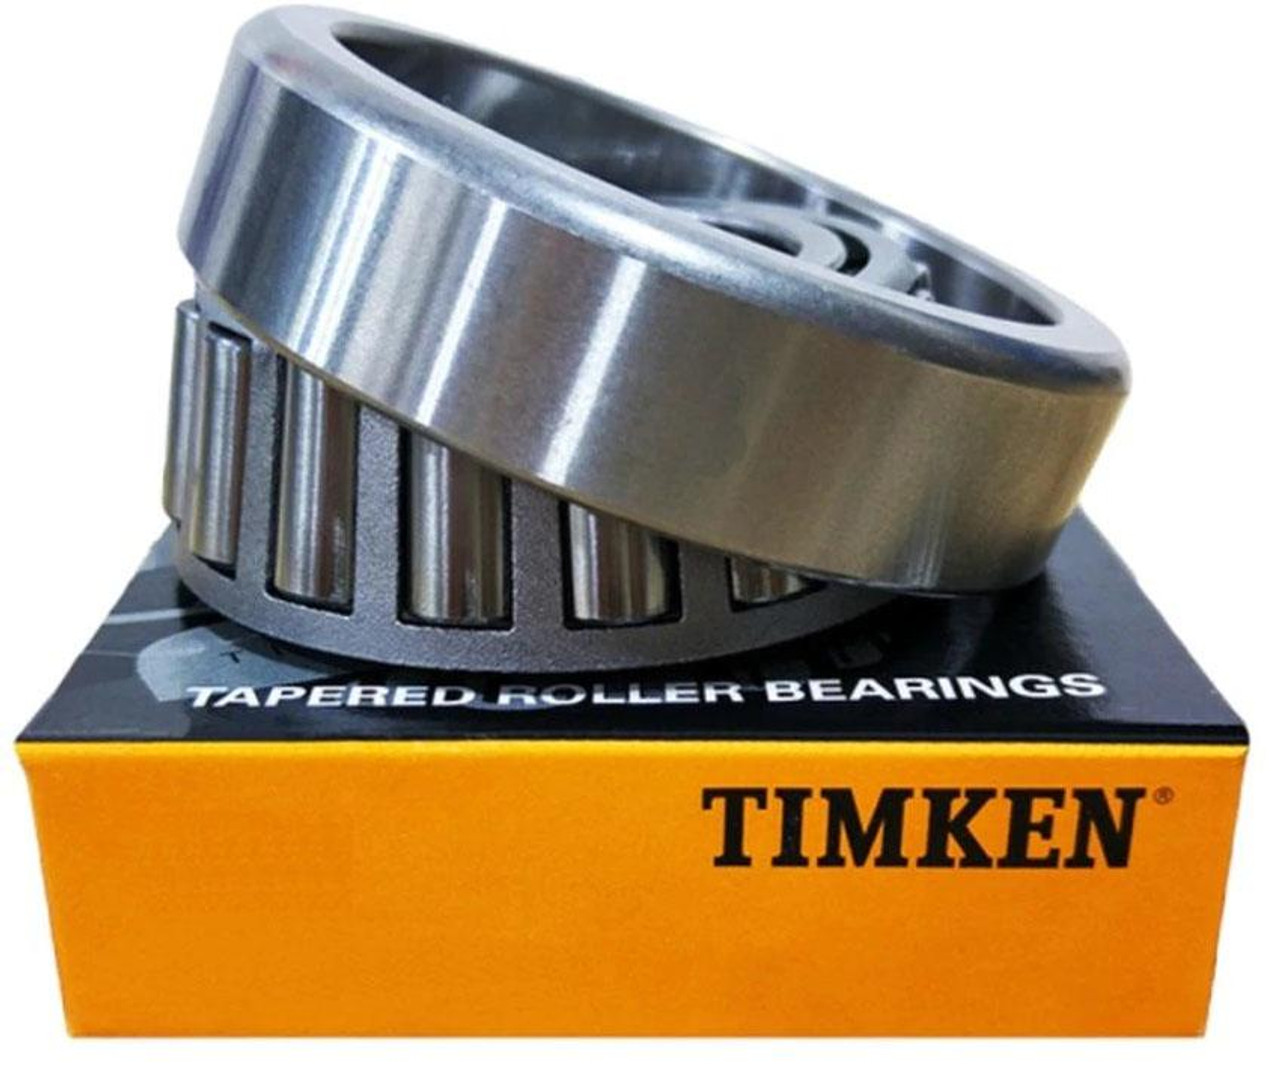 Timken® Metric Cup & Cone Set  33011-90KA1